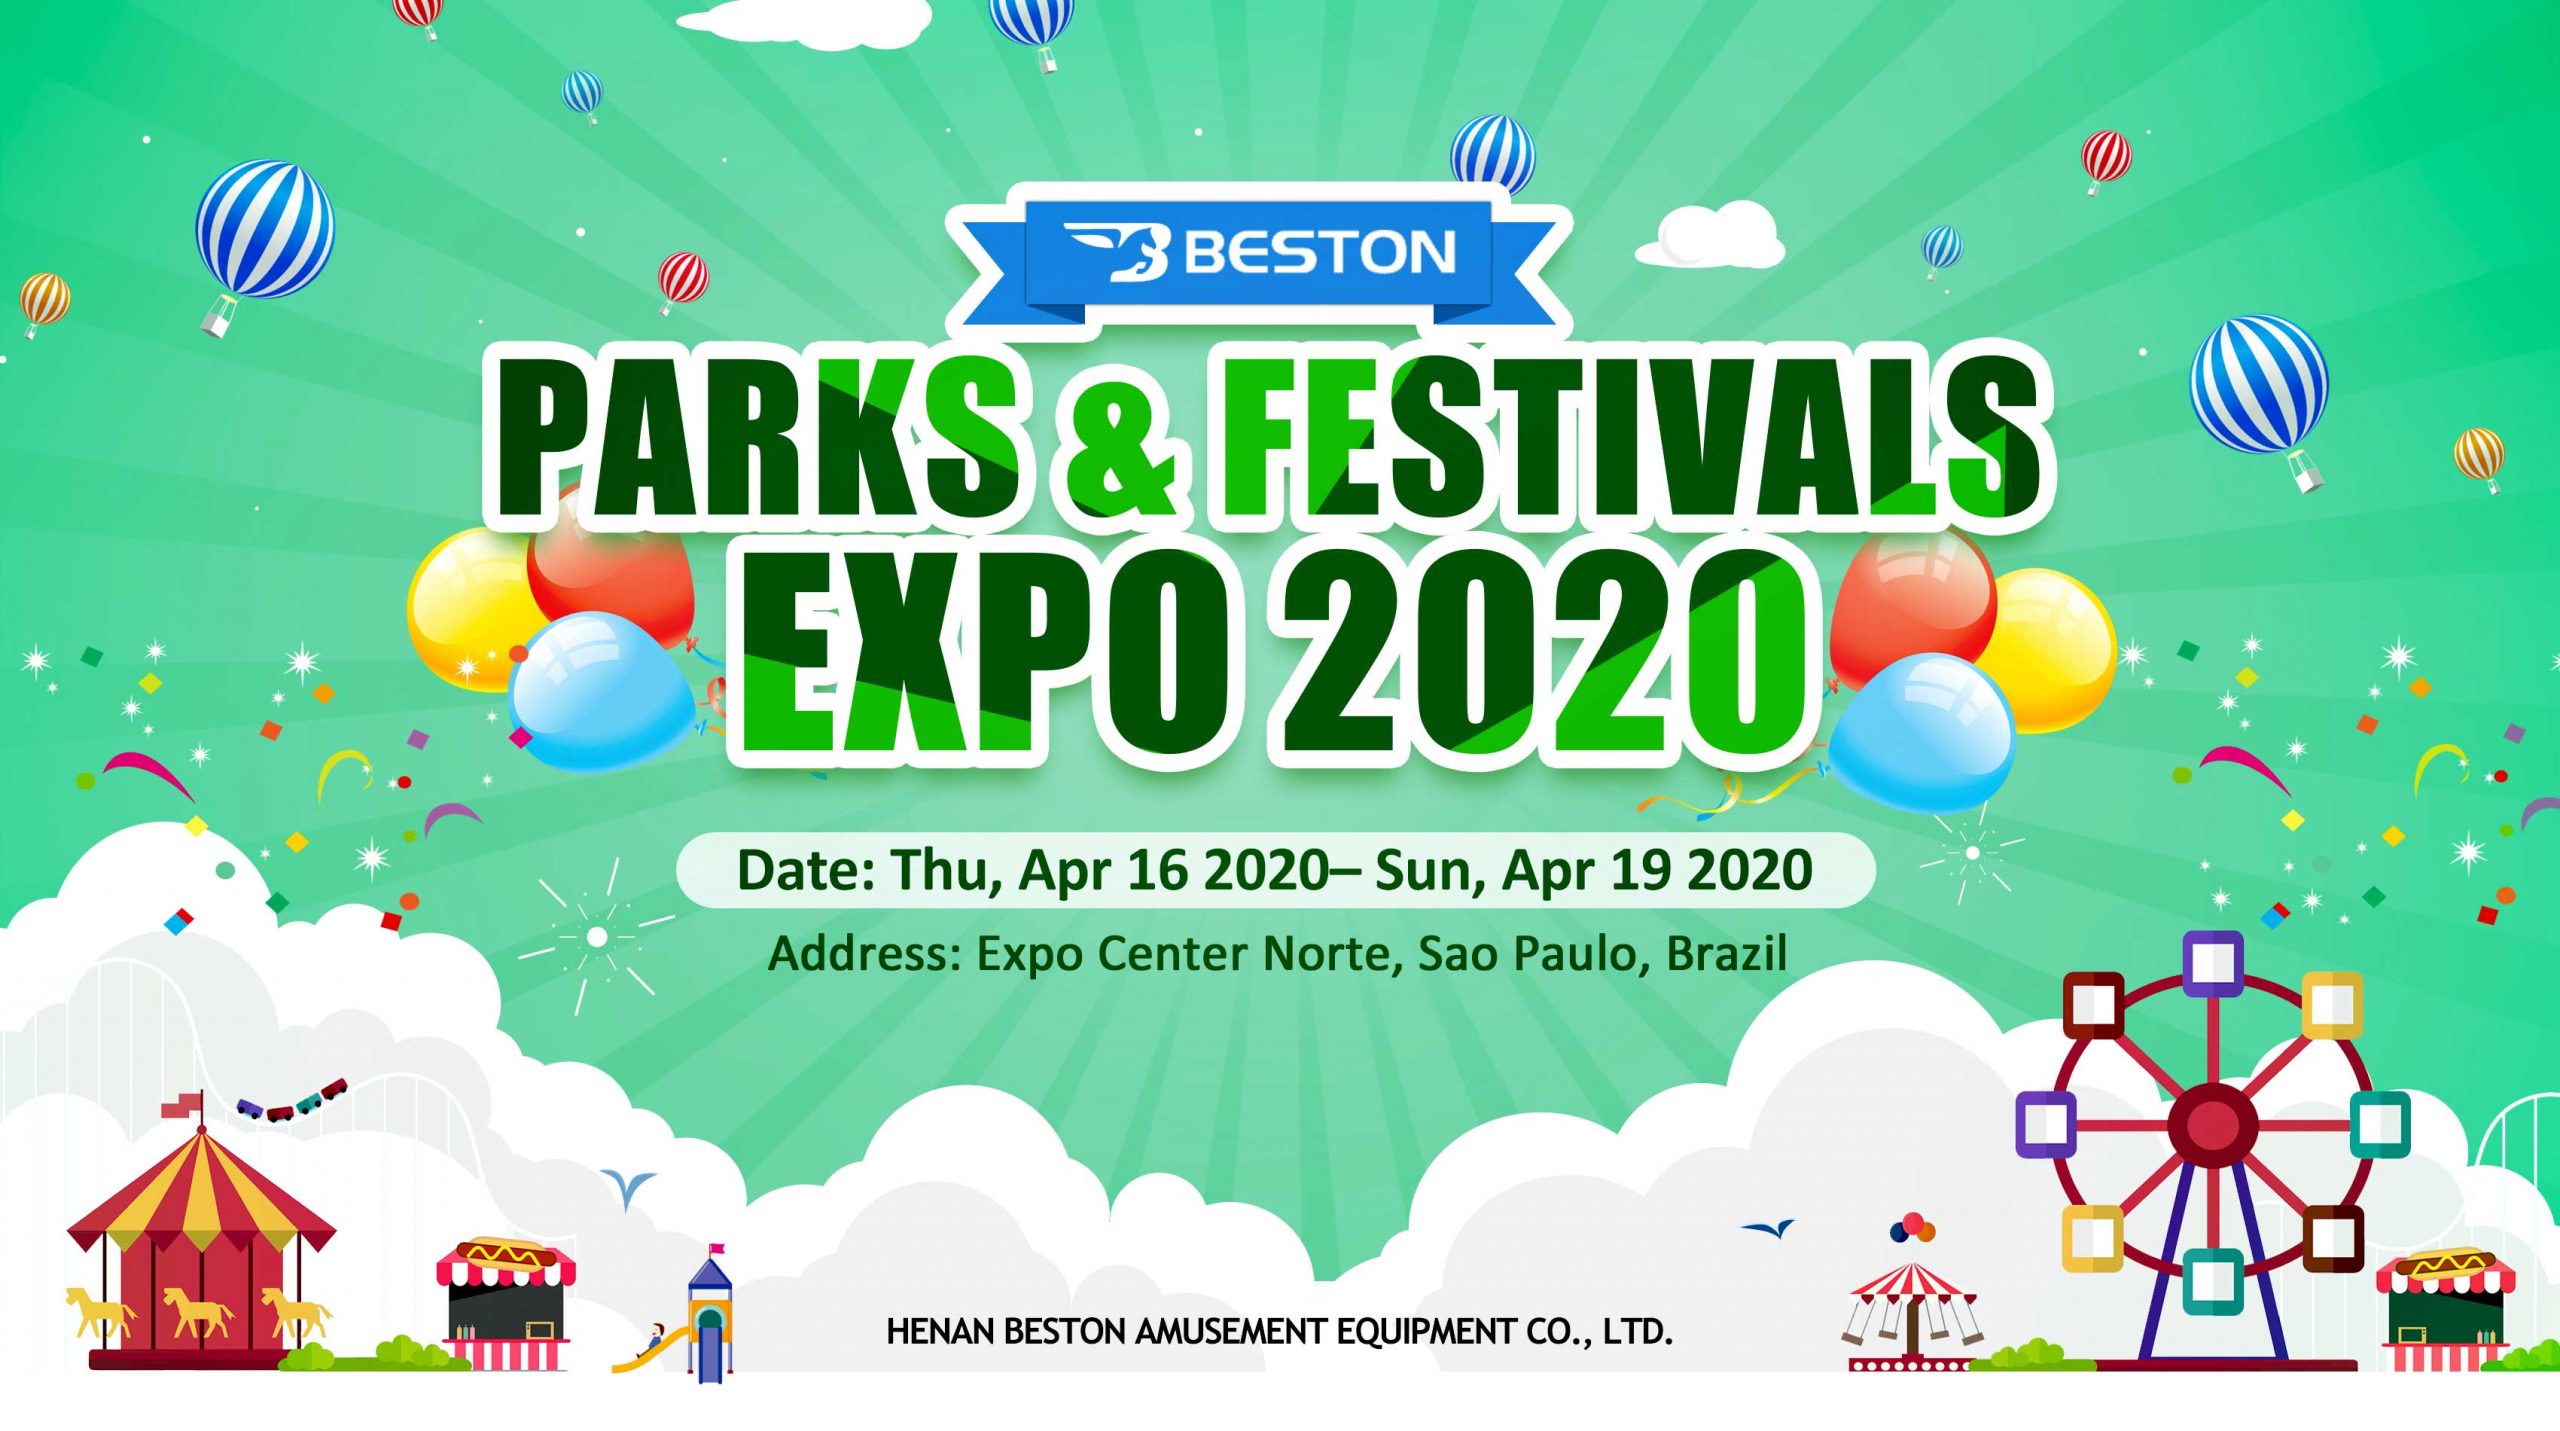 Parks & Festivals Expo 2020